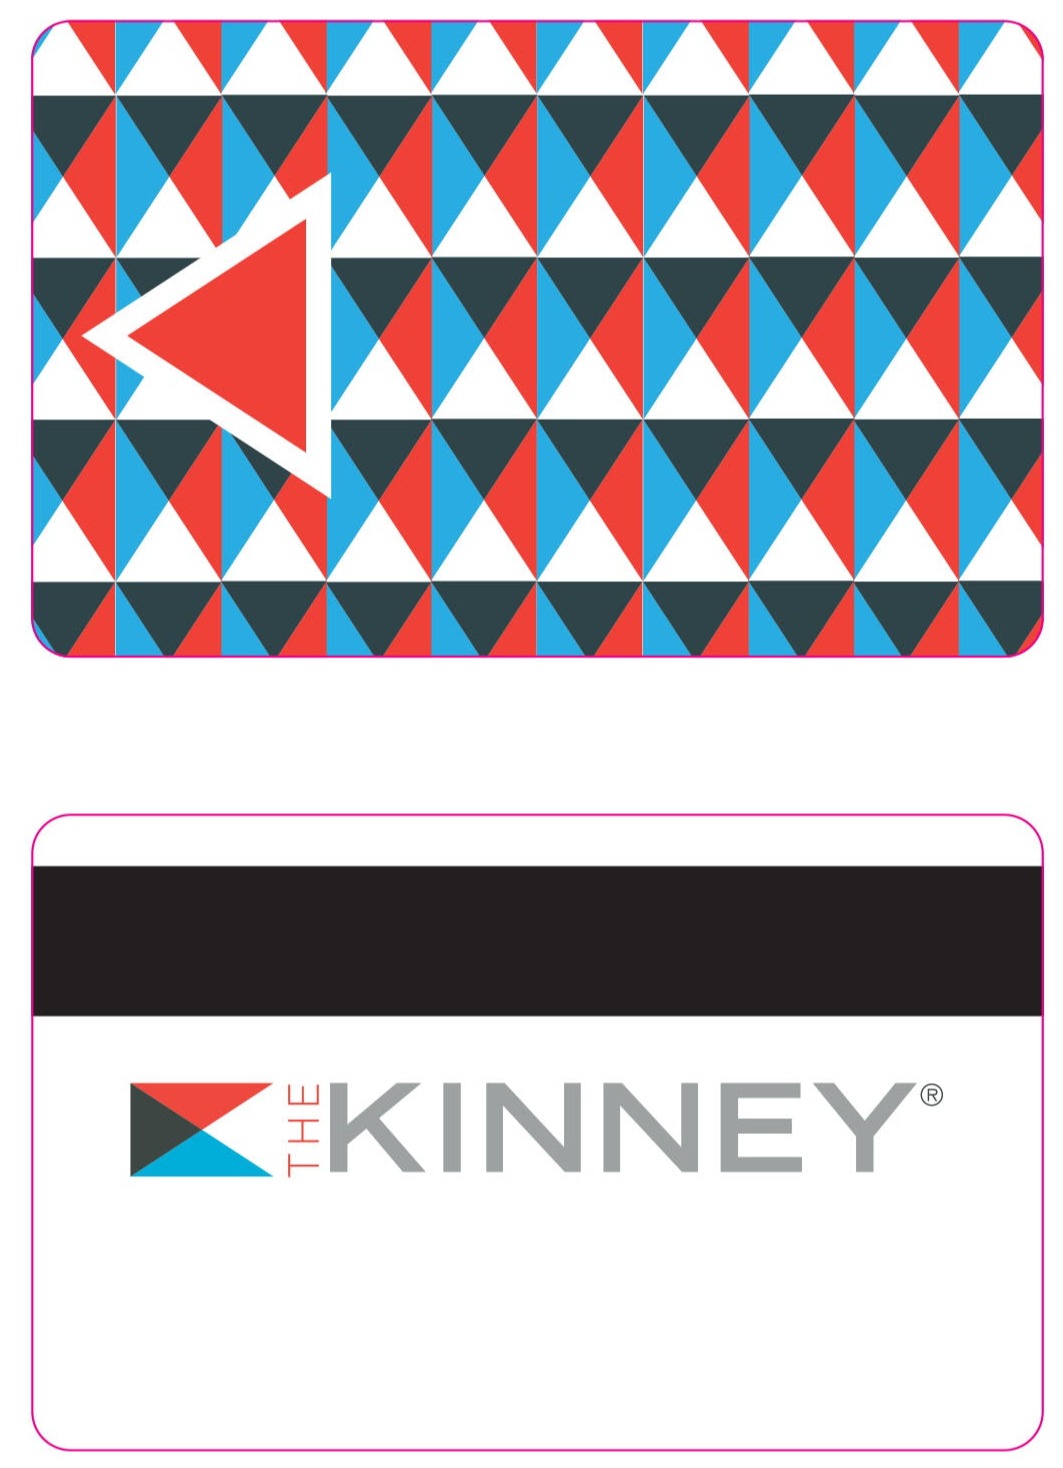 Kinney Hotel Magnetic Stripe Key Card (500 cards per box / $65 per box)